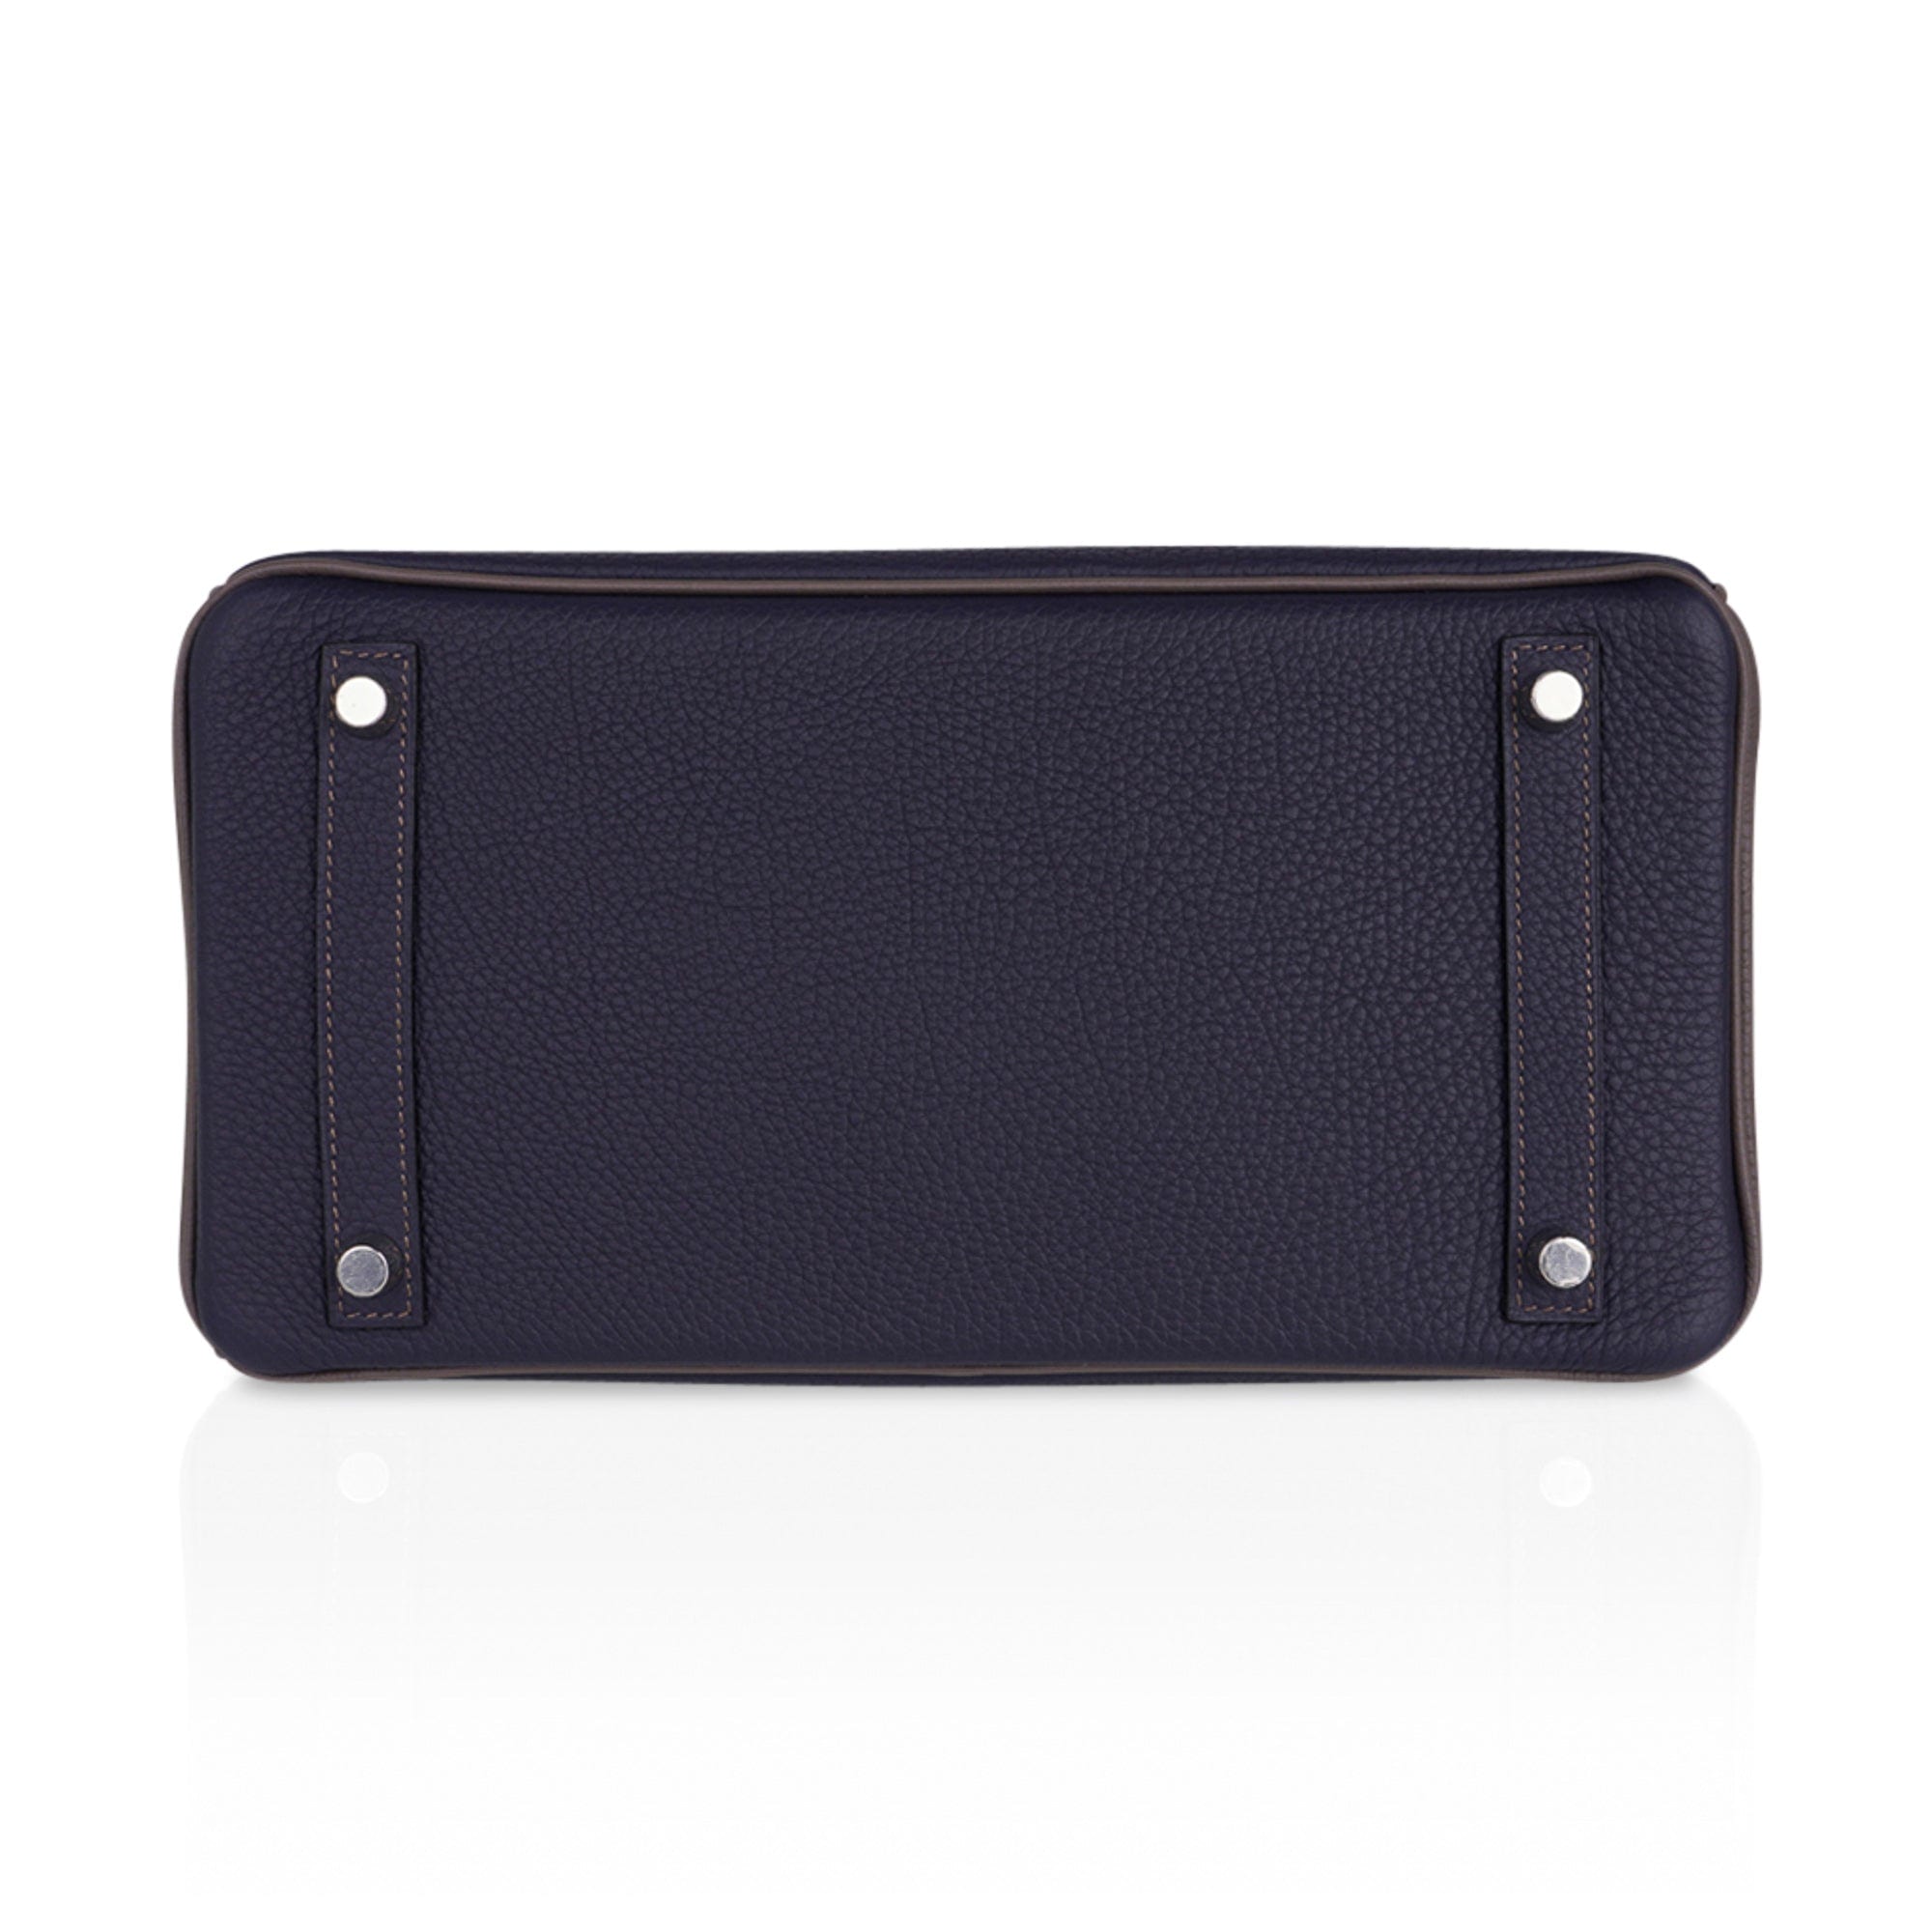 Hermès - Authenticated Birkin 30 Handbag - Leather Blue Plain for Women, Very Good Condition